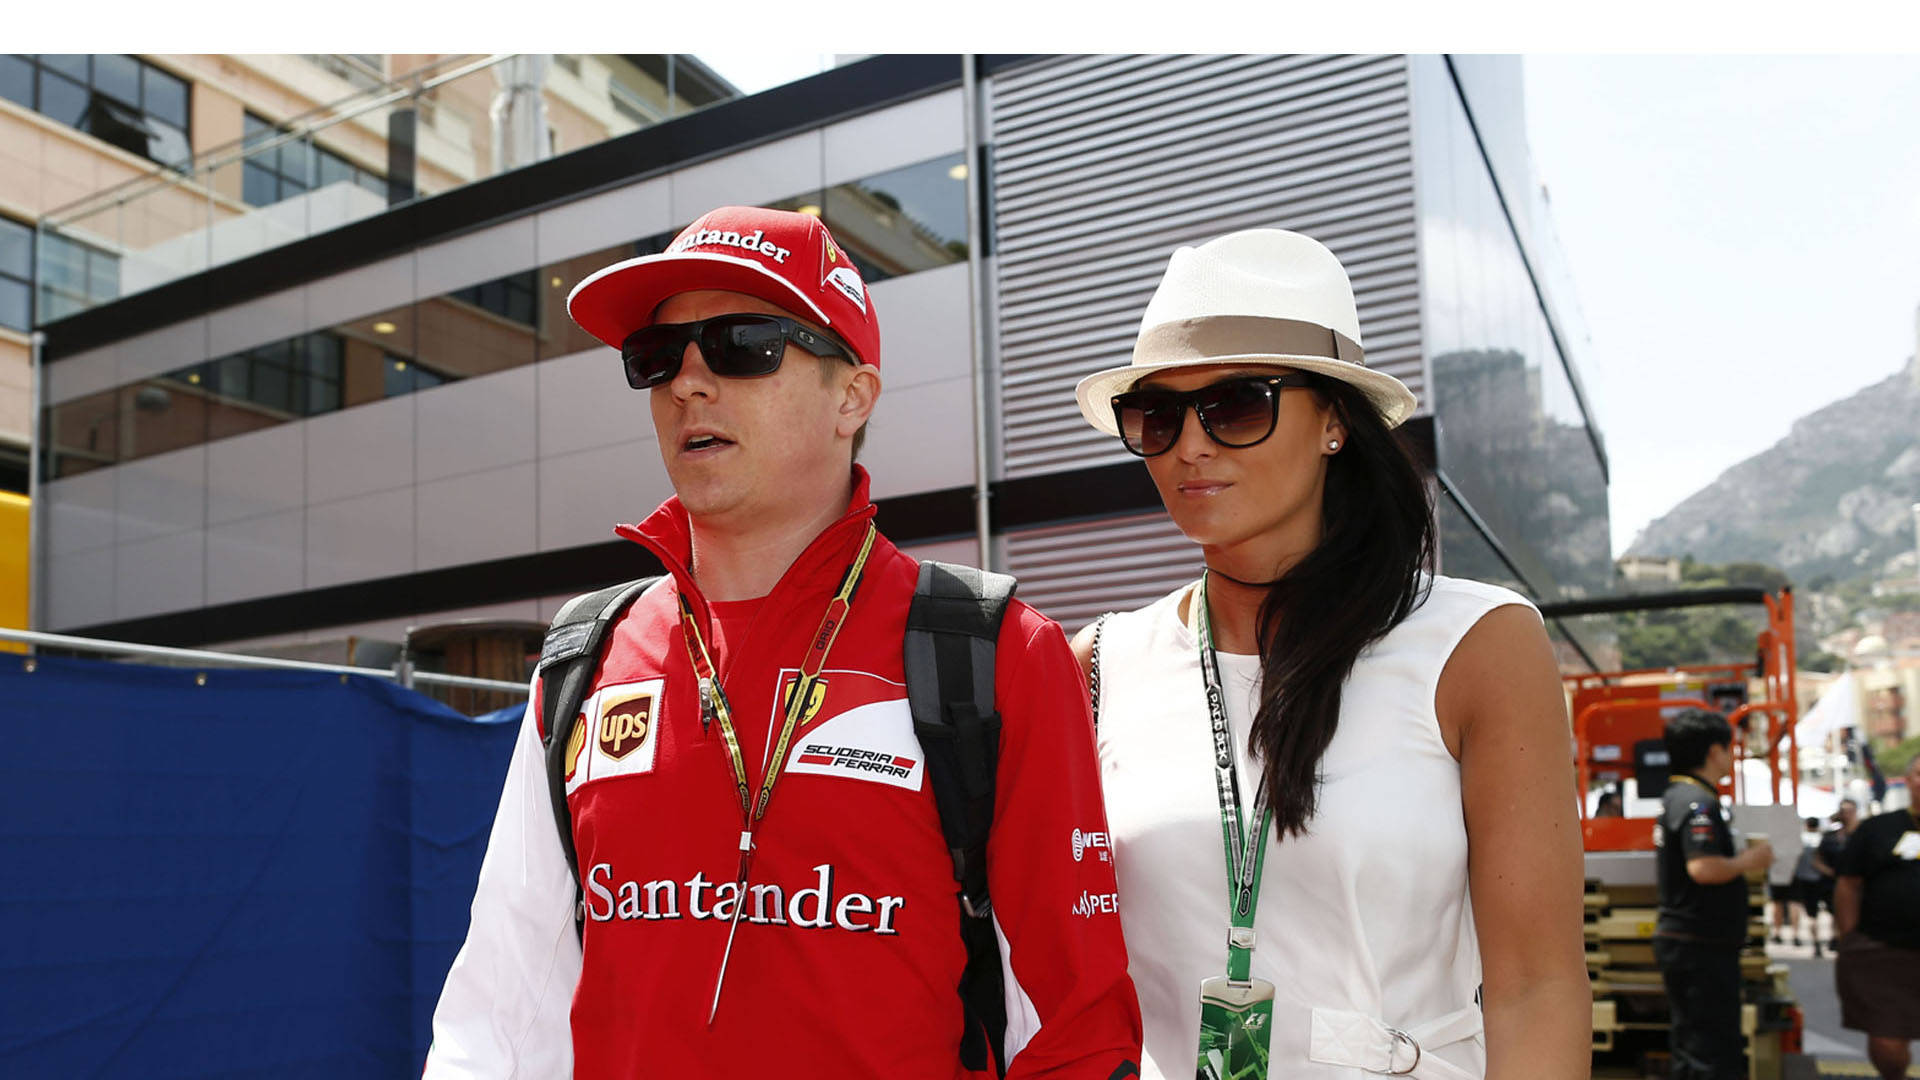 En una ceremonia privada en Italia se celebró la unión matrimonial entre el piloto de Ferrari Kimi Räikkönen y Minttu Virtanen